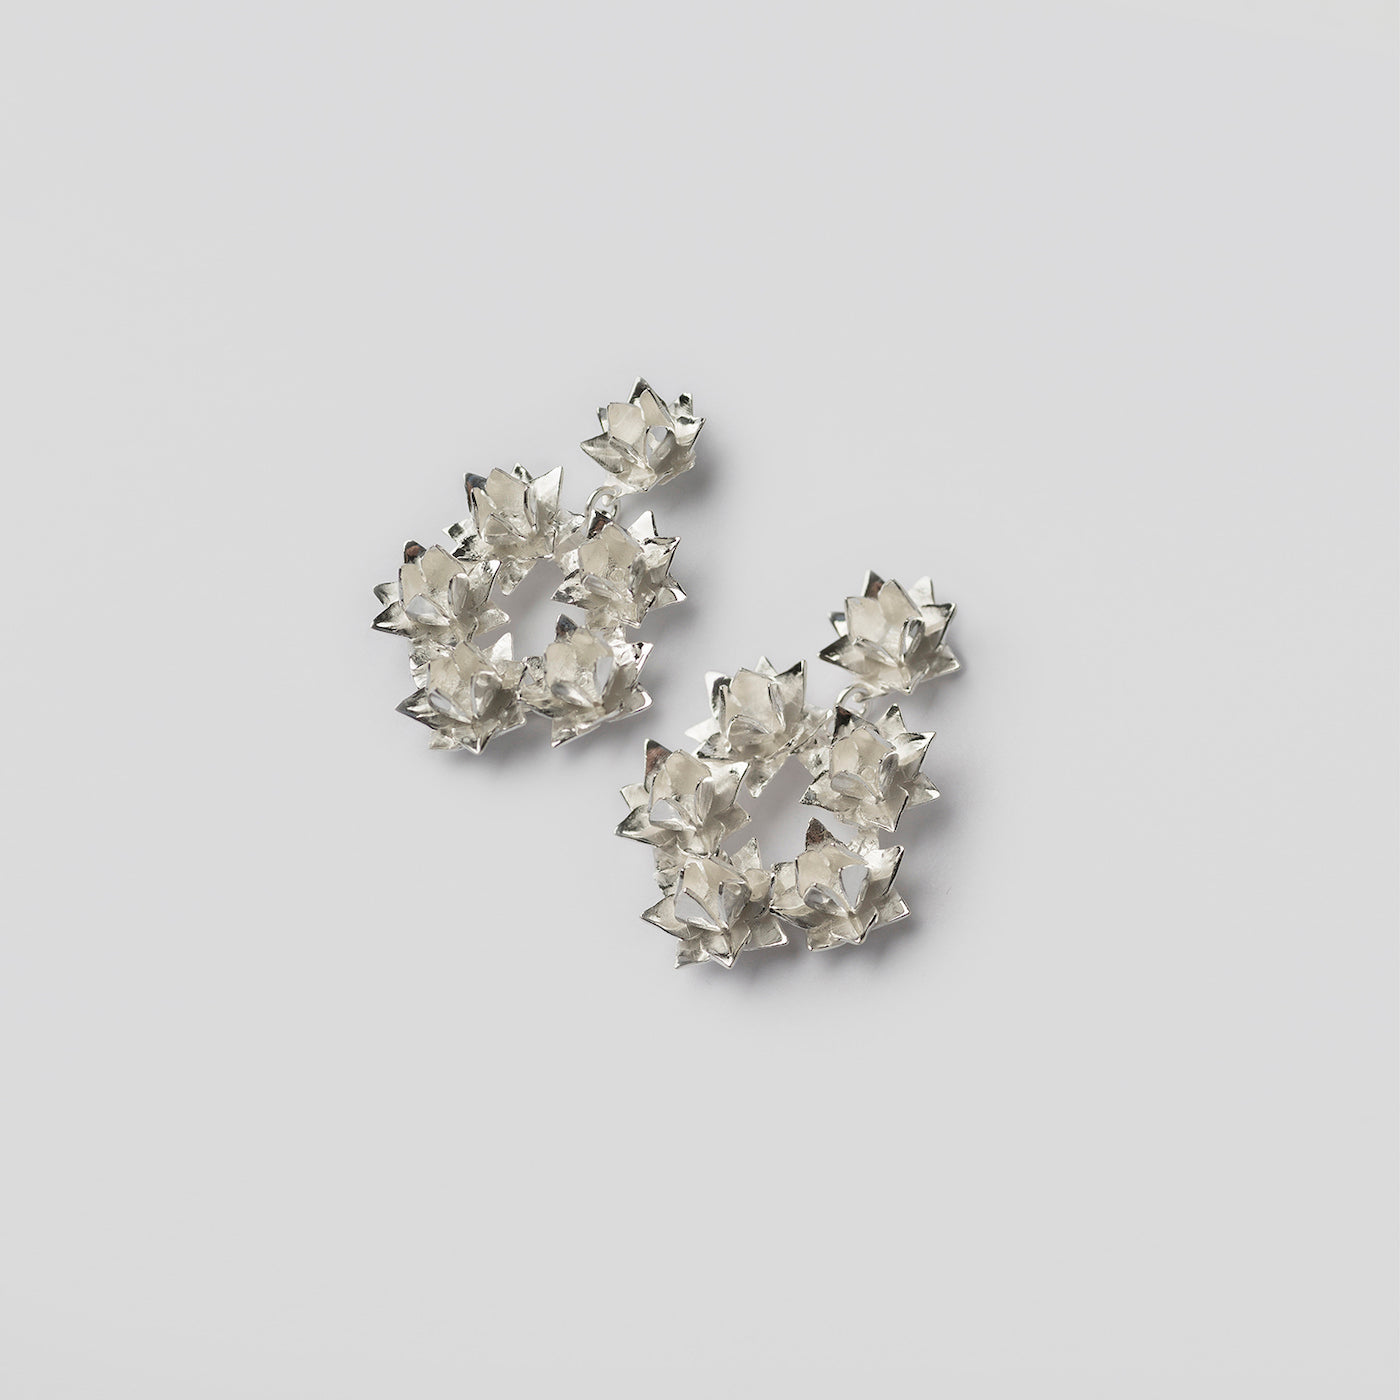 Lotus Wreath Earrings - Silver